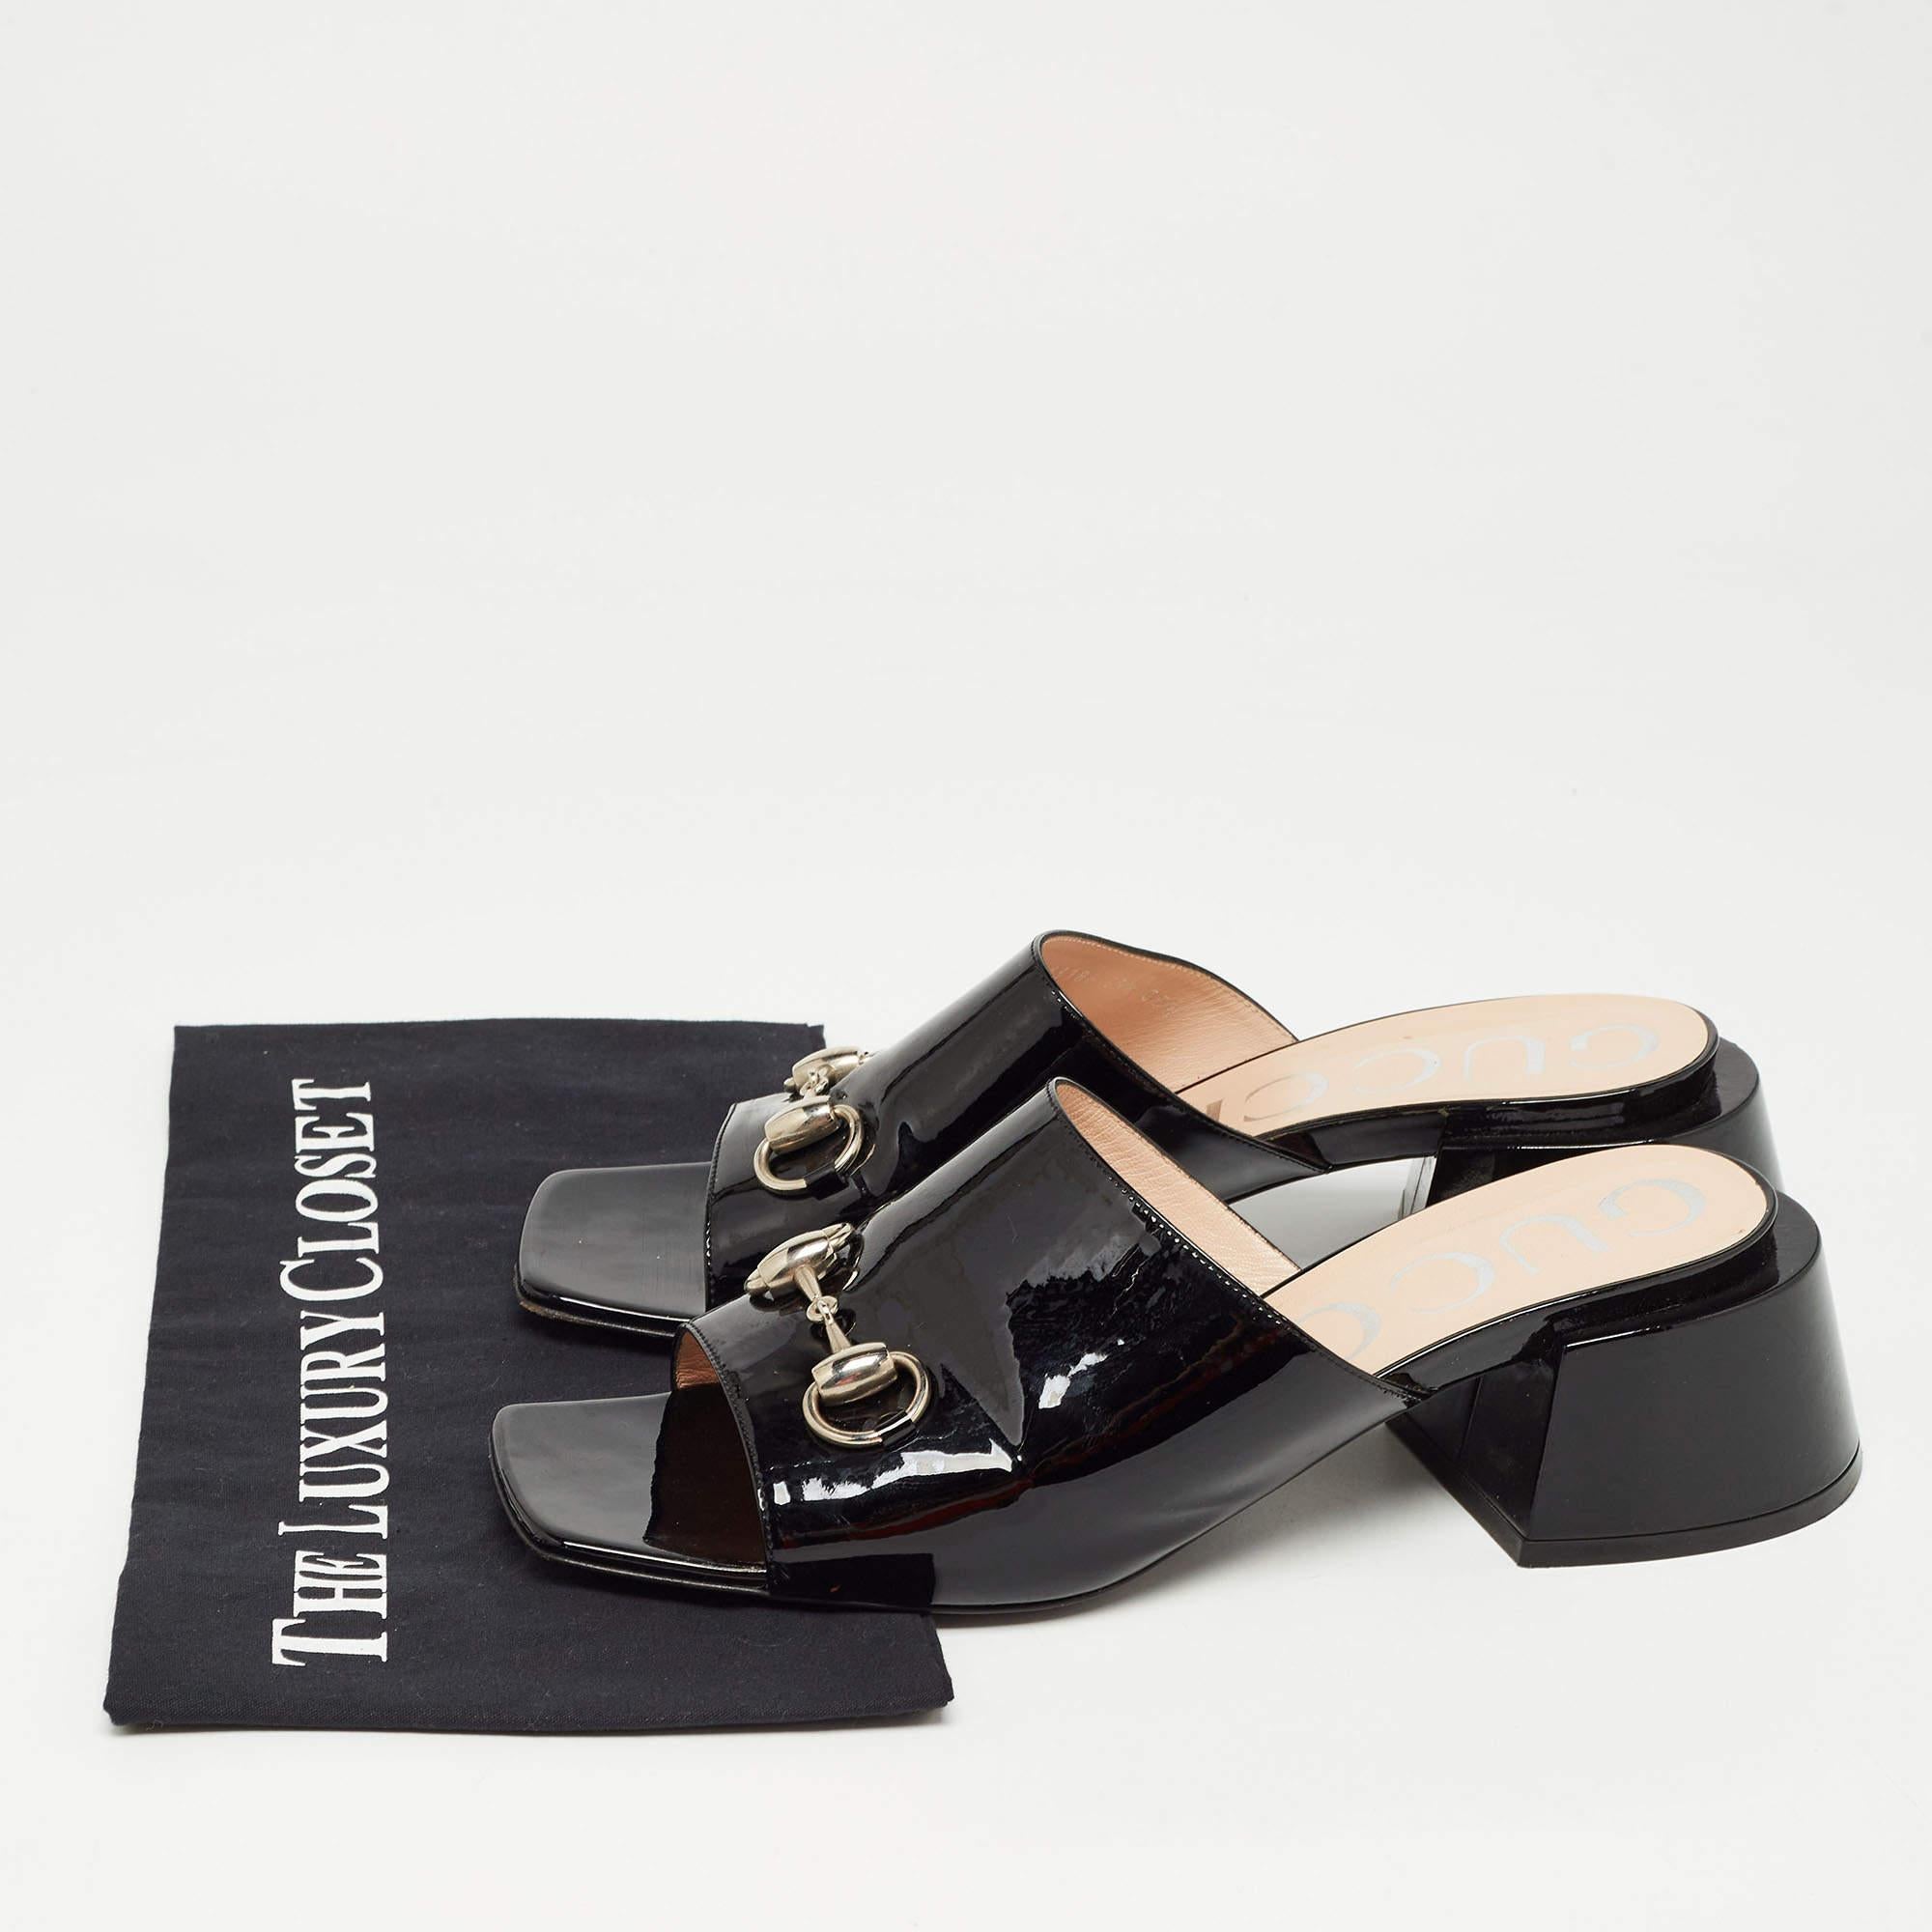 Gucci Black Patent Leather Horsebit Block Heel Slide Sandals Size 39.5 For Sale 5